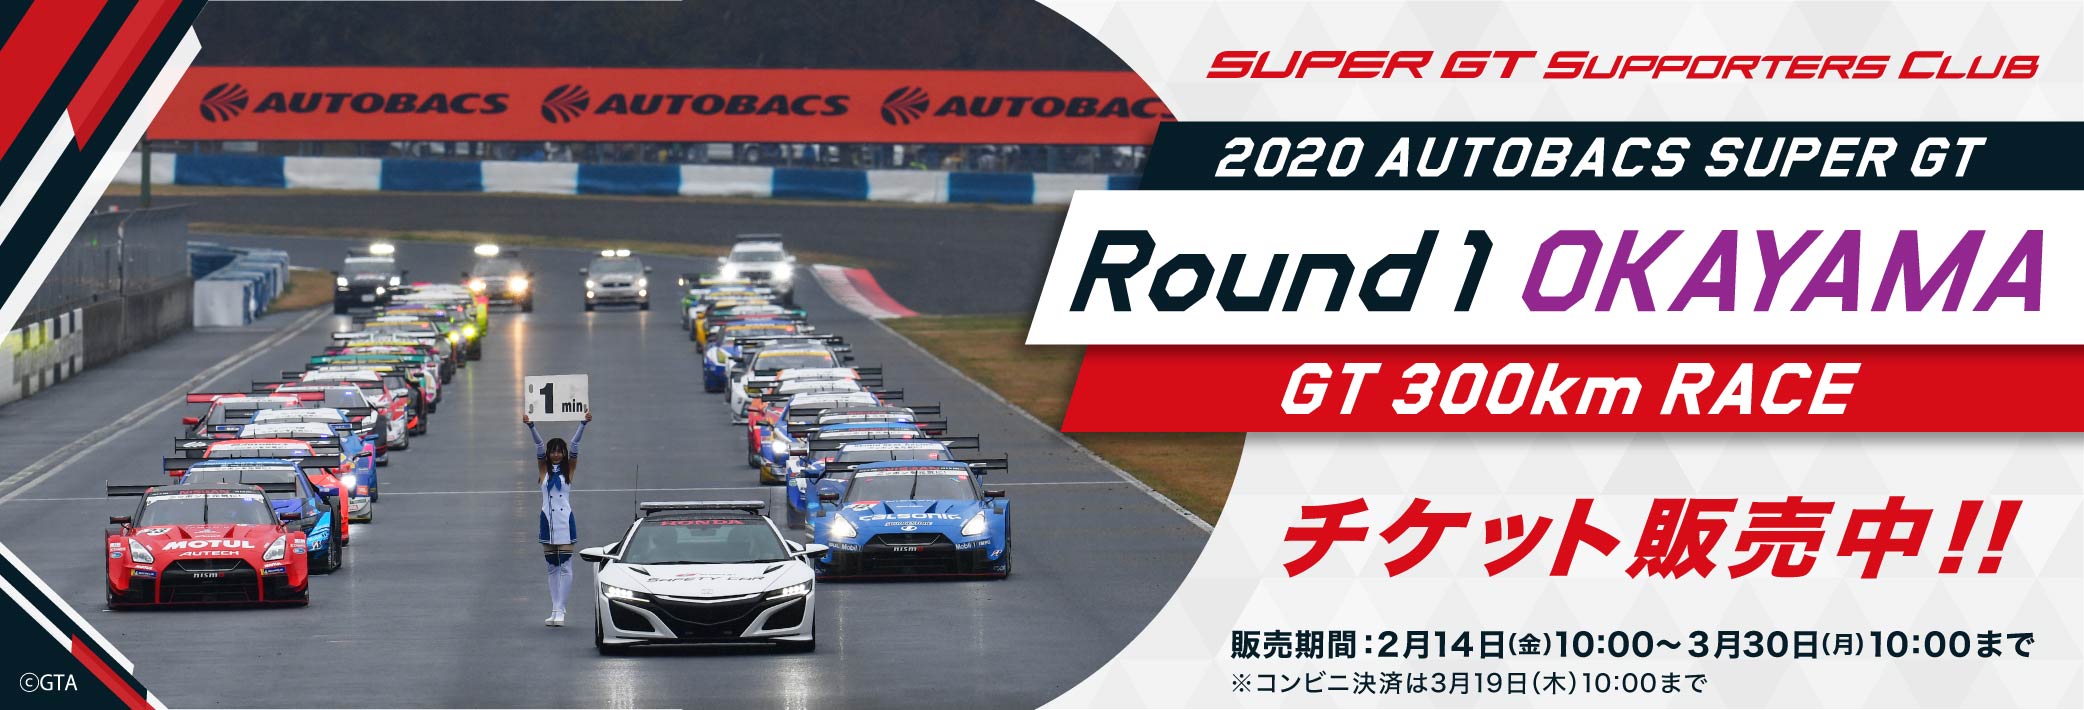 2020 SUPER GT Rd.1 OKAYAMA GT 300km RACE チケット販売のご案内